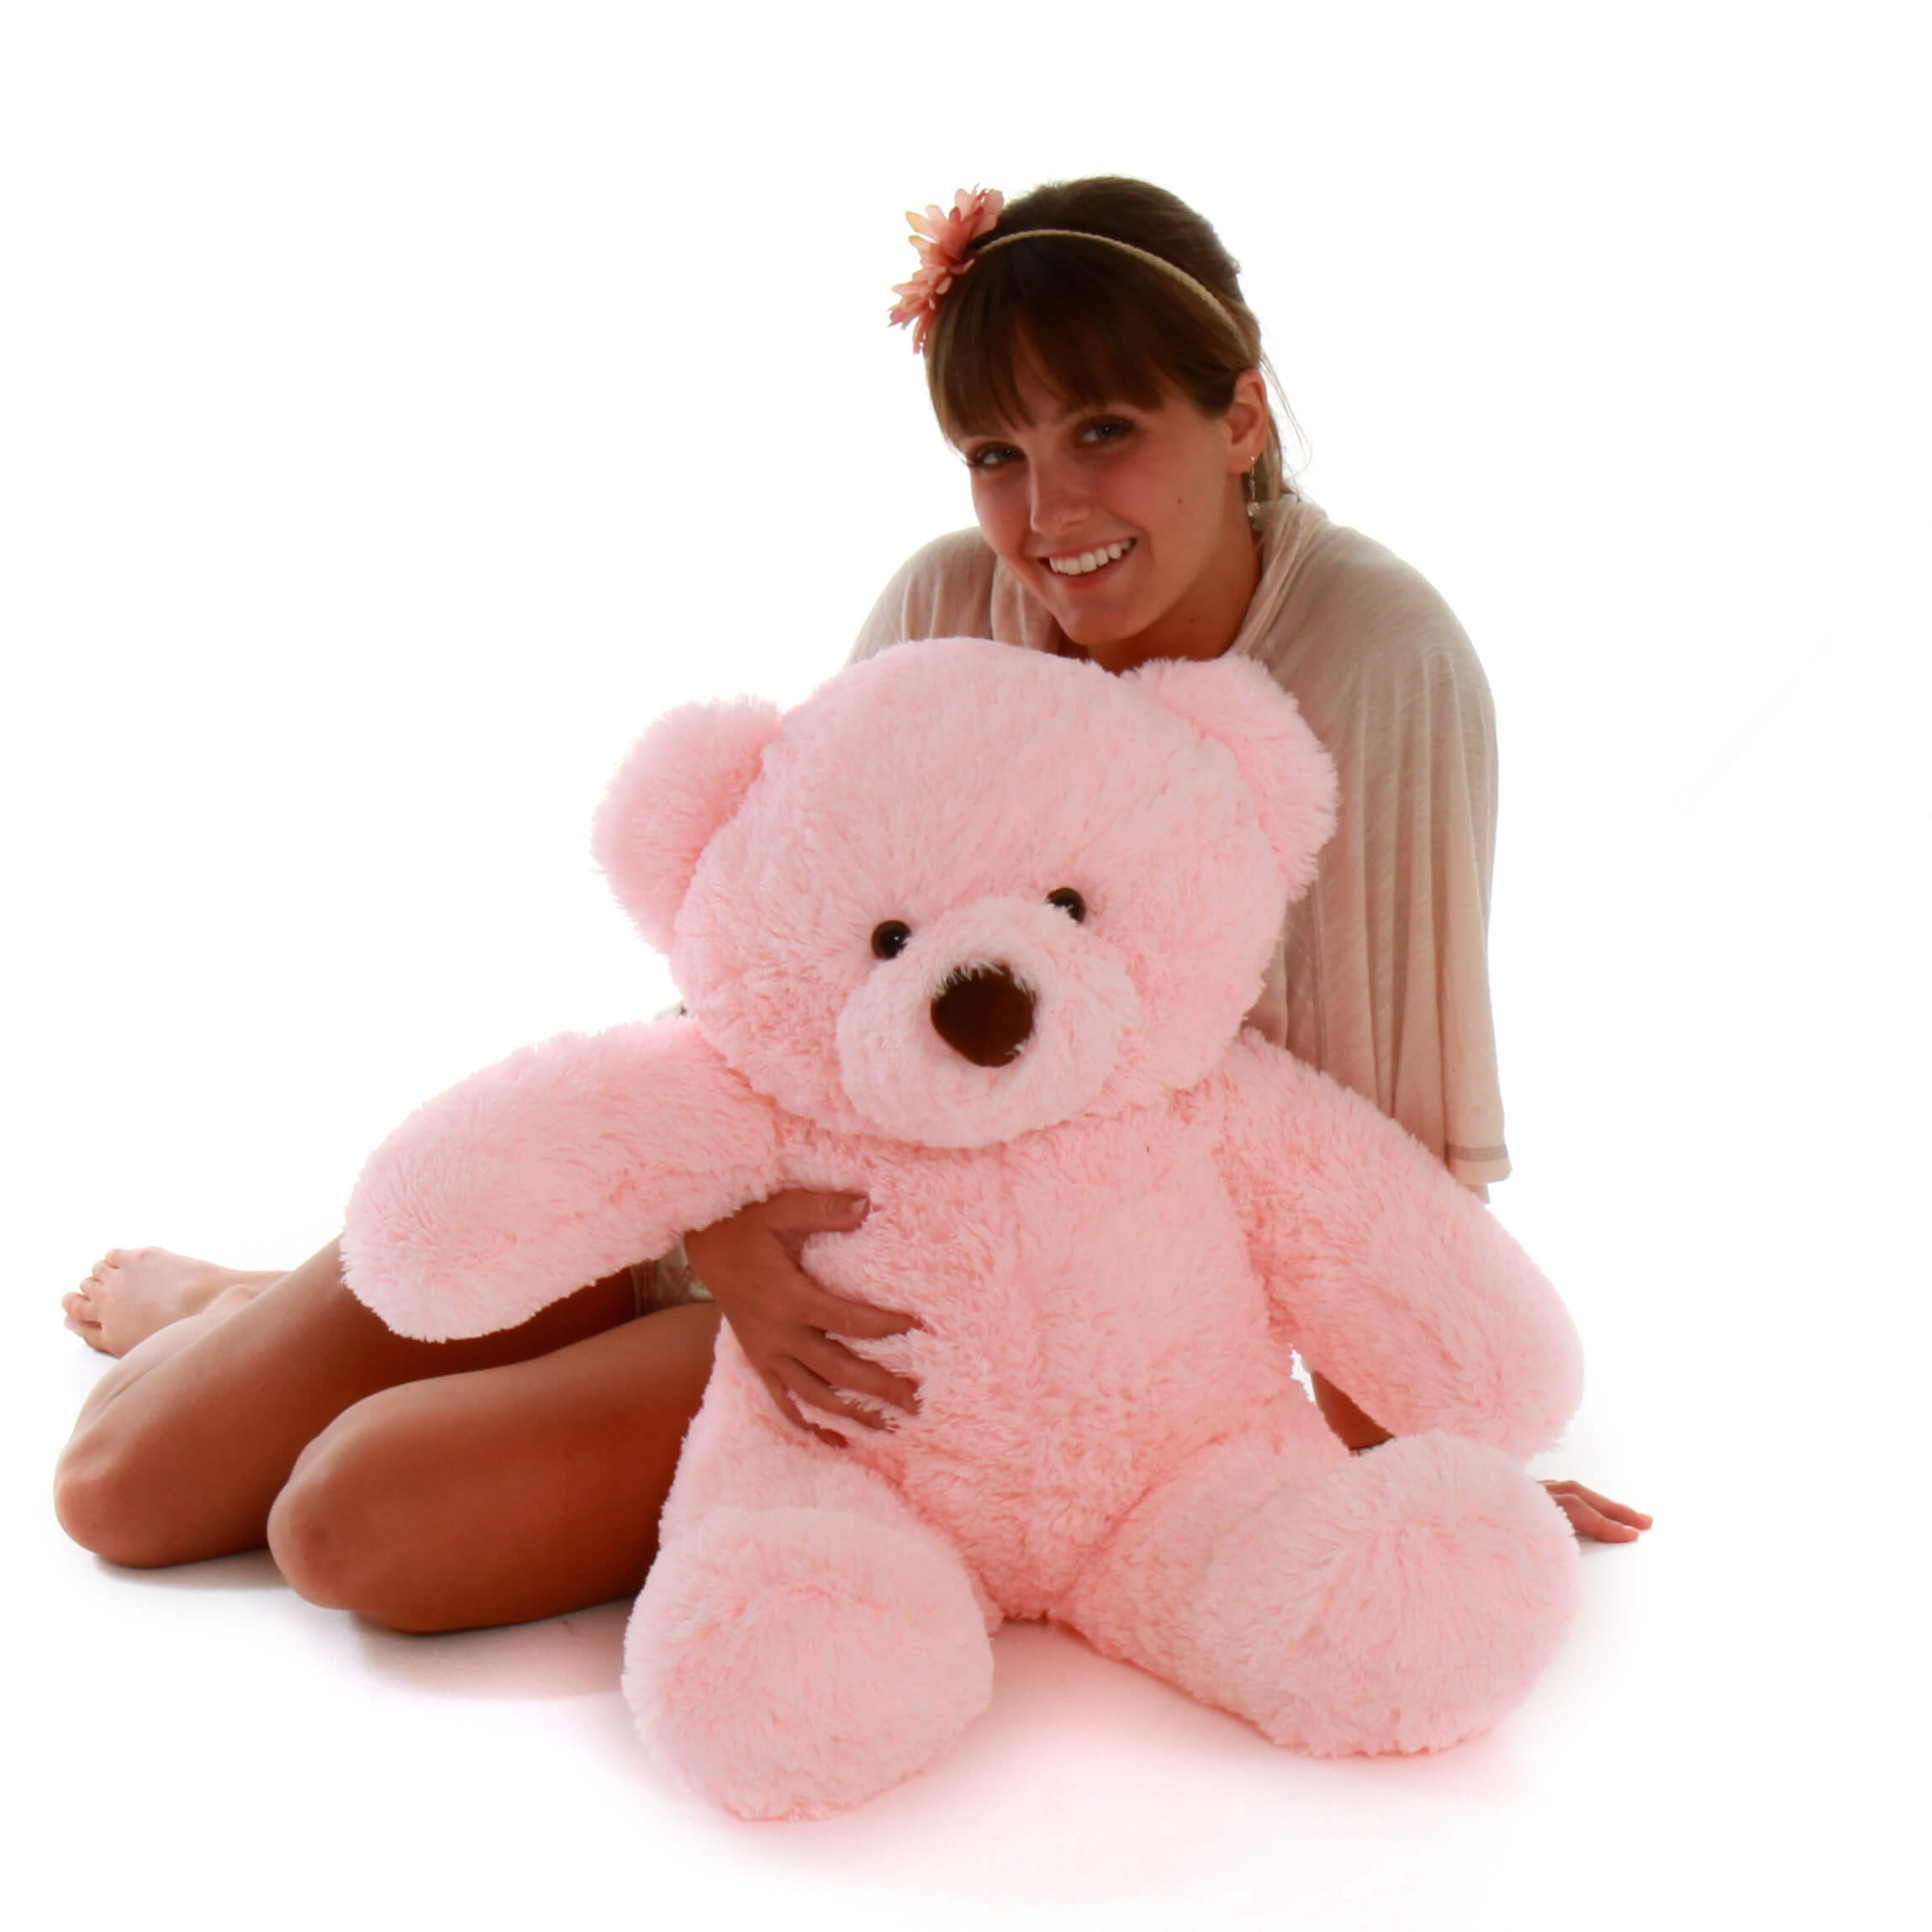 gigi-chubs-light-rose-30in-us-made-giant-teddy-super-adorable-1.jpg